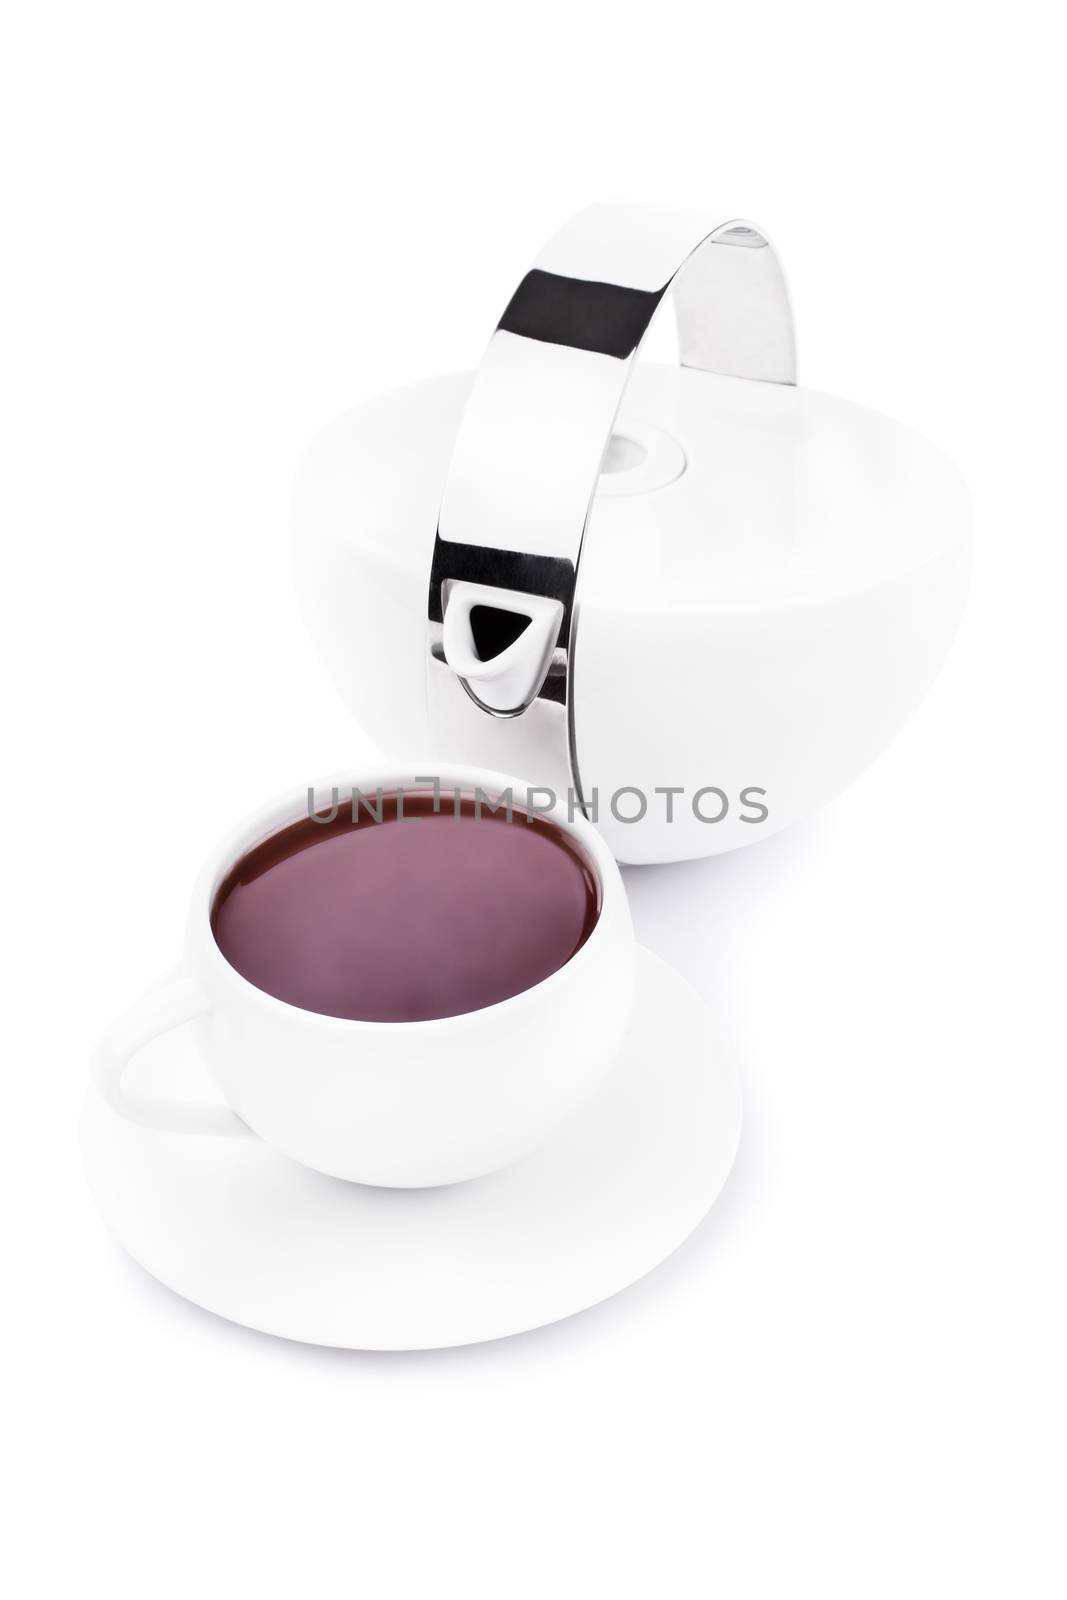 Tea cup and tea pot by Mendelex